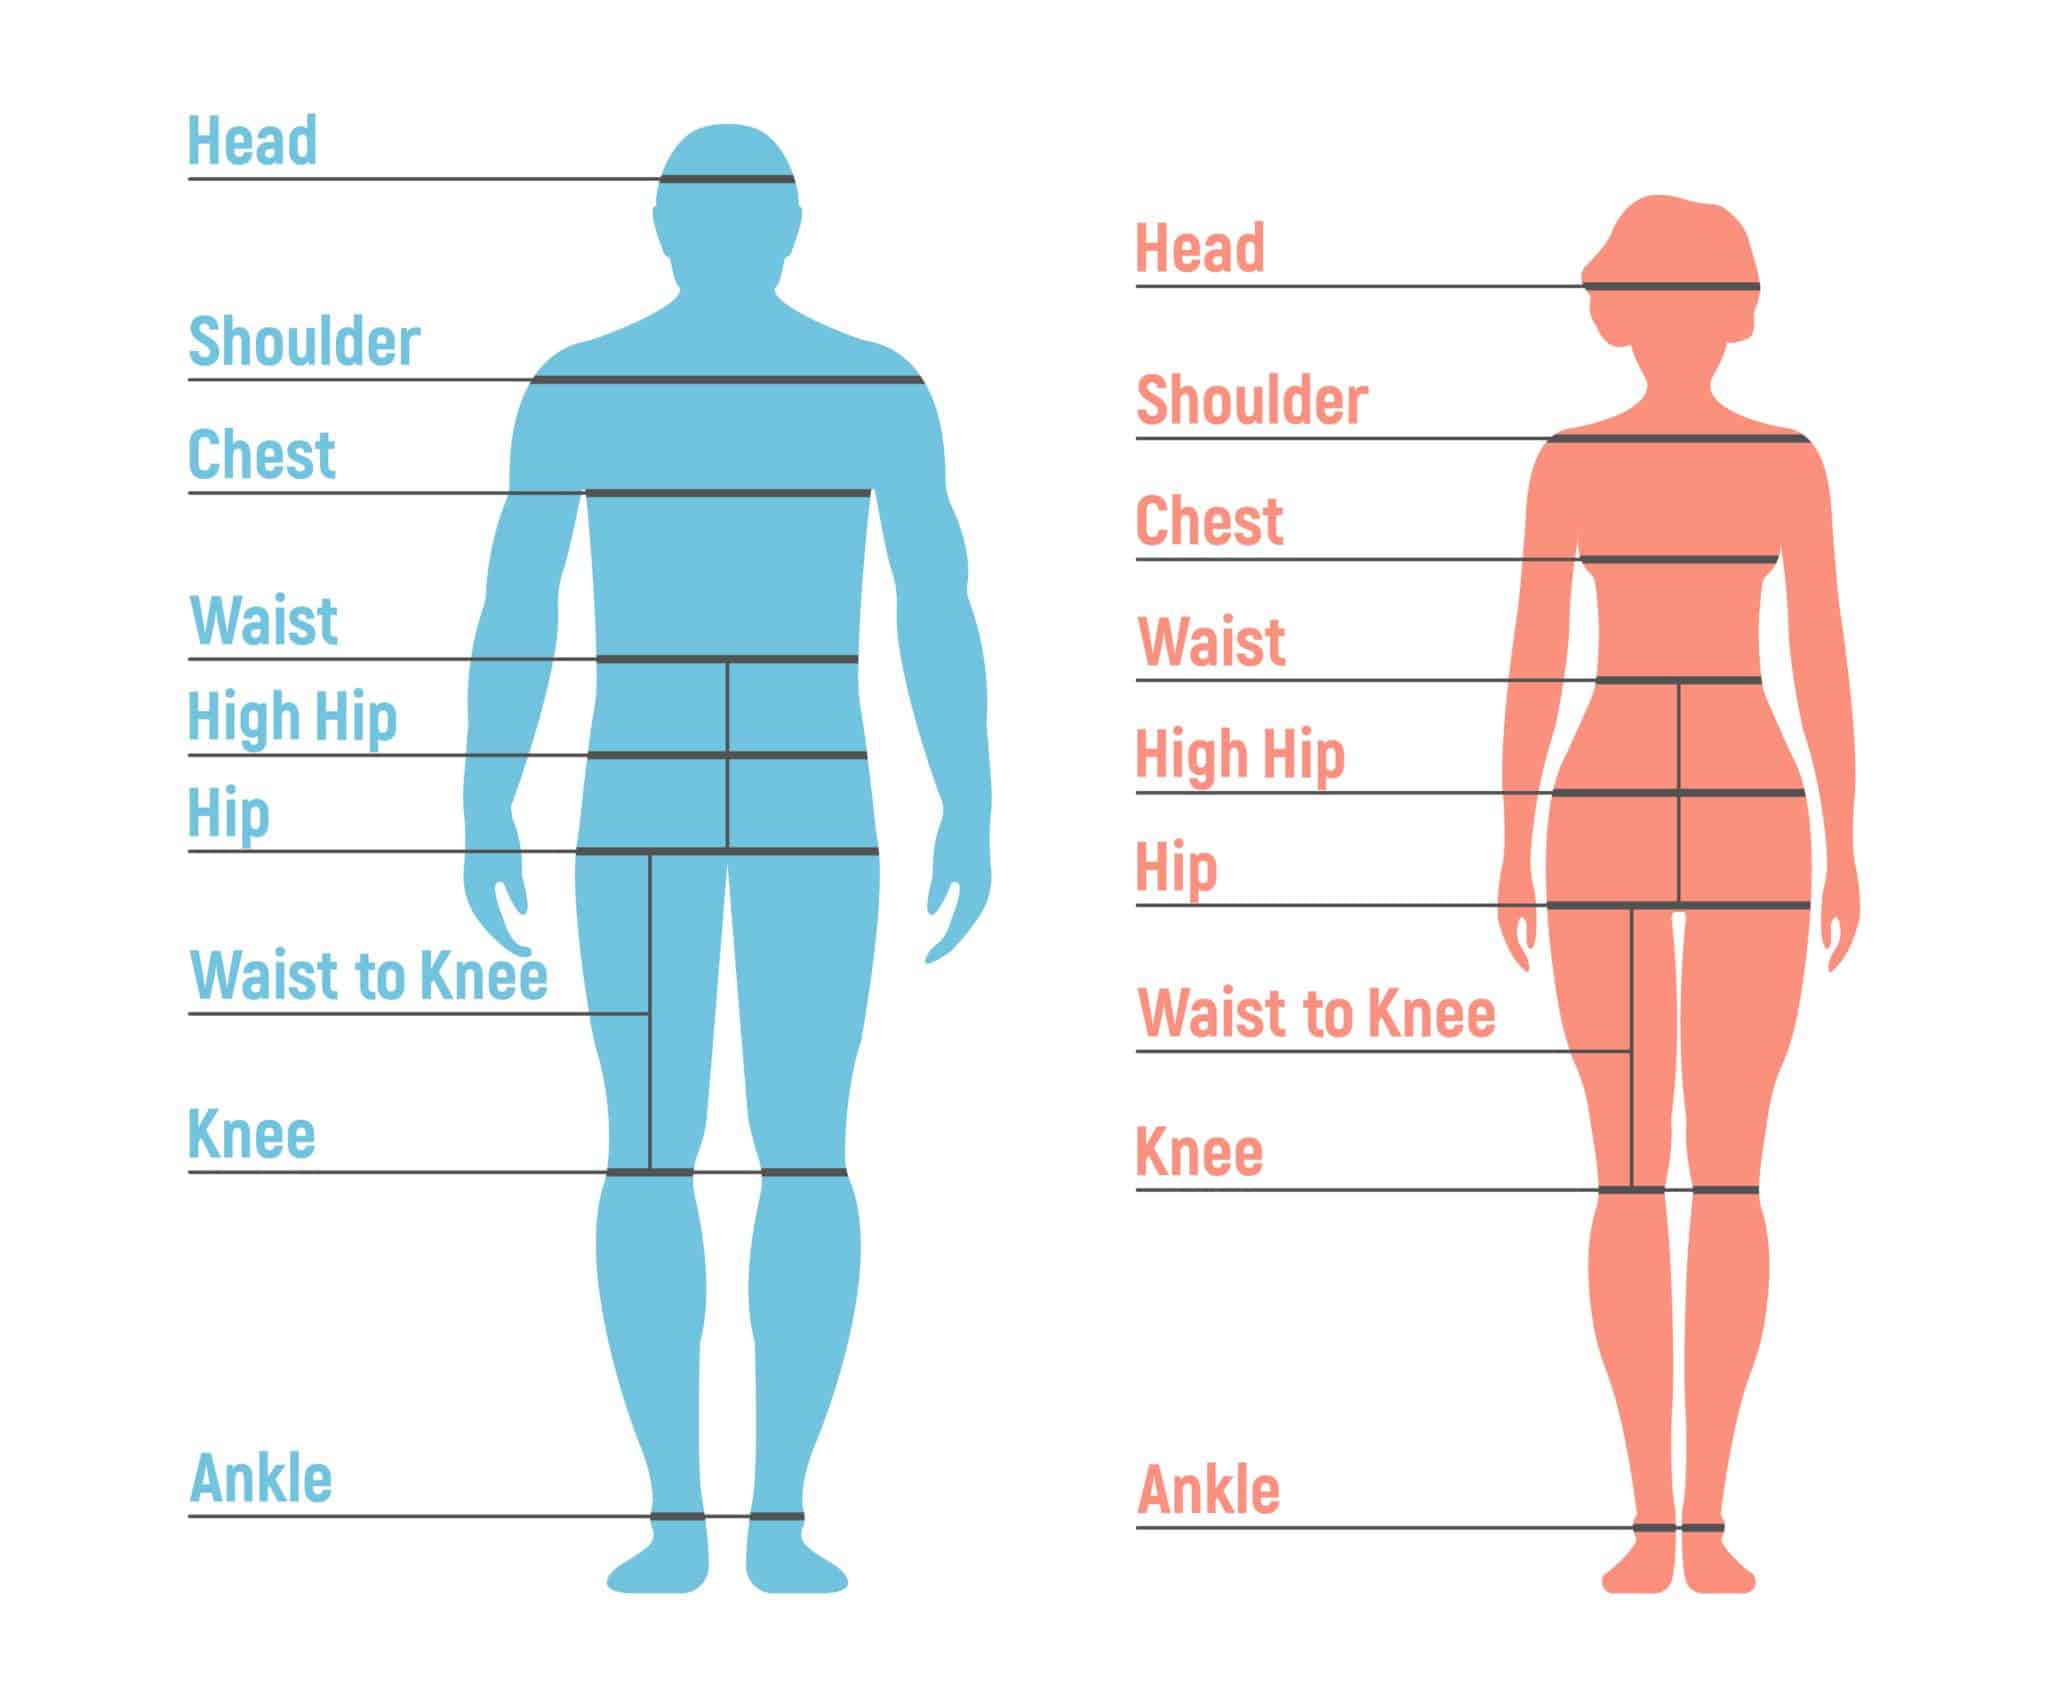 visual representation of body measurements